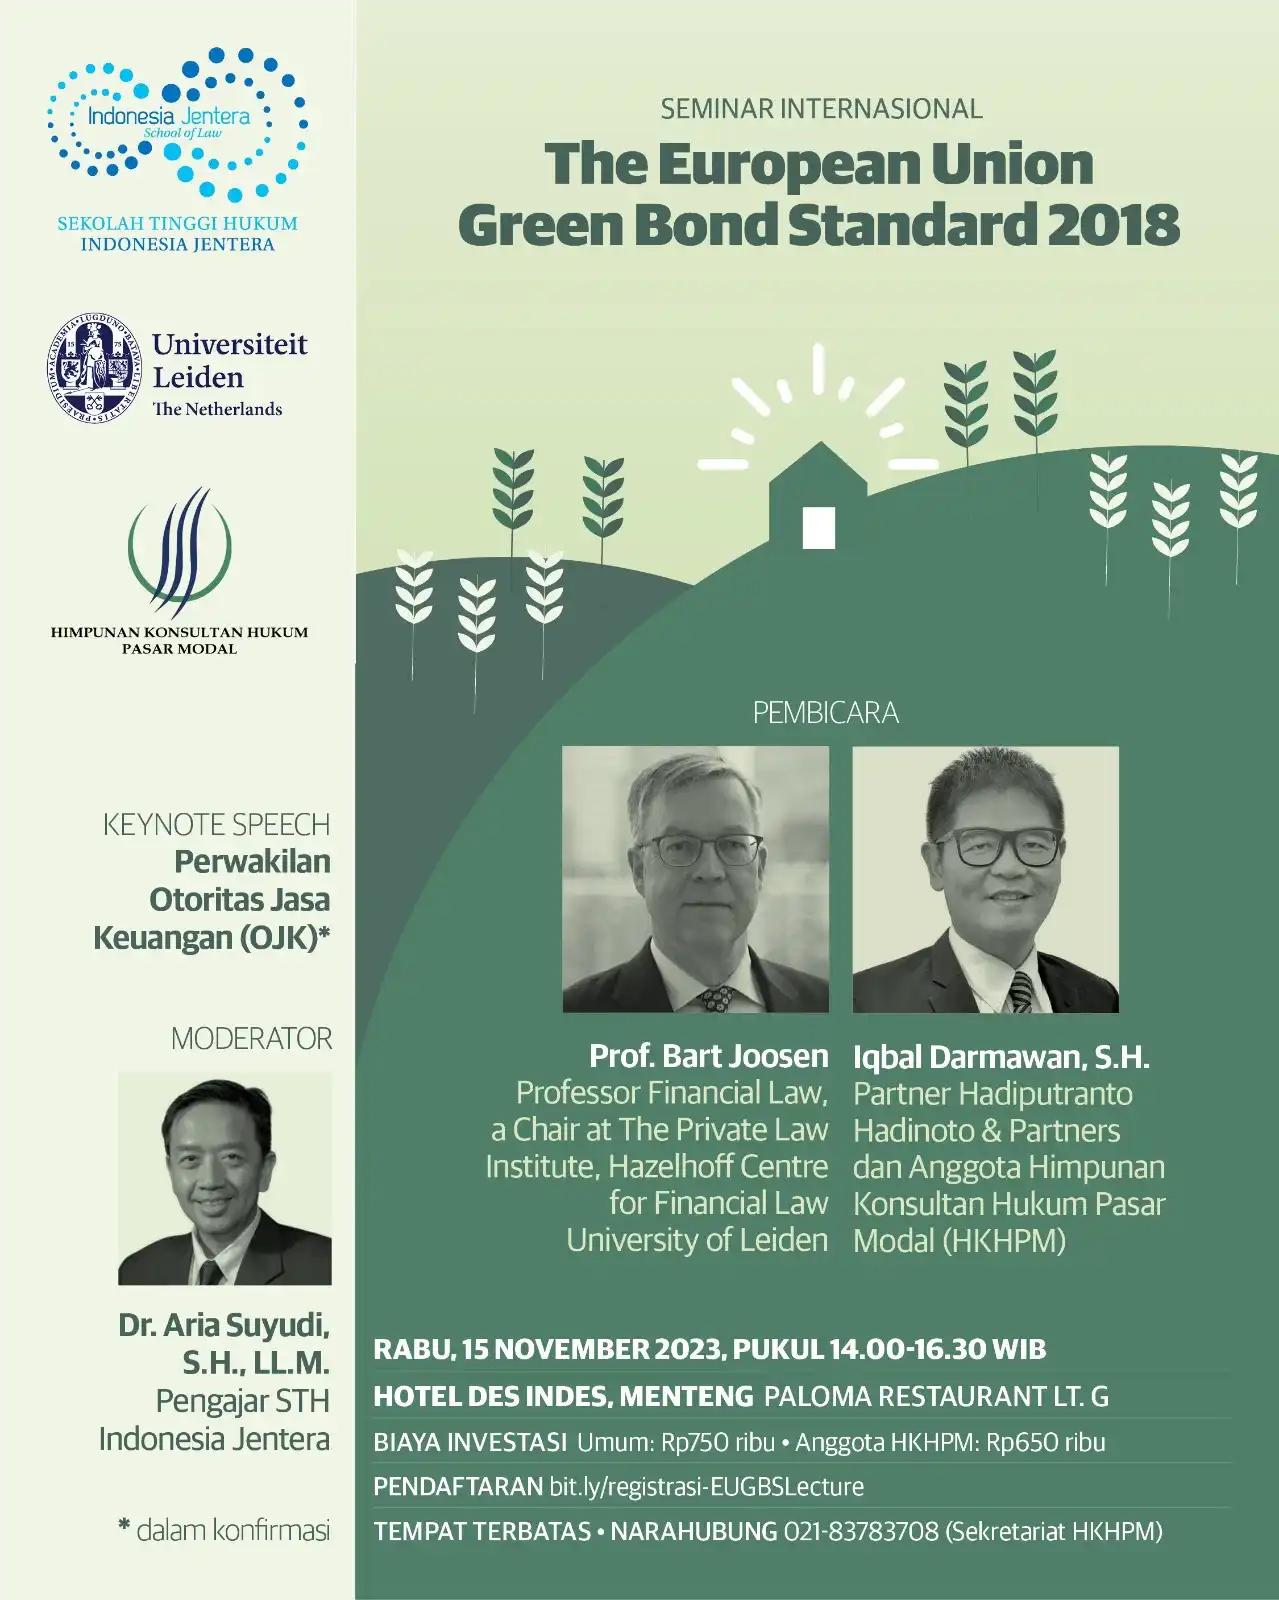 STH Indonesia Jentera Gelar Seminar Internasional Soal EU Green Bond